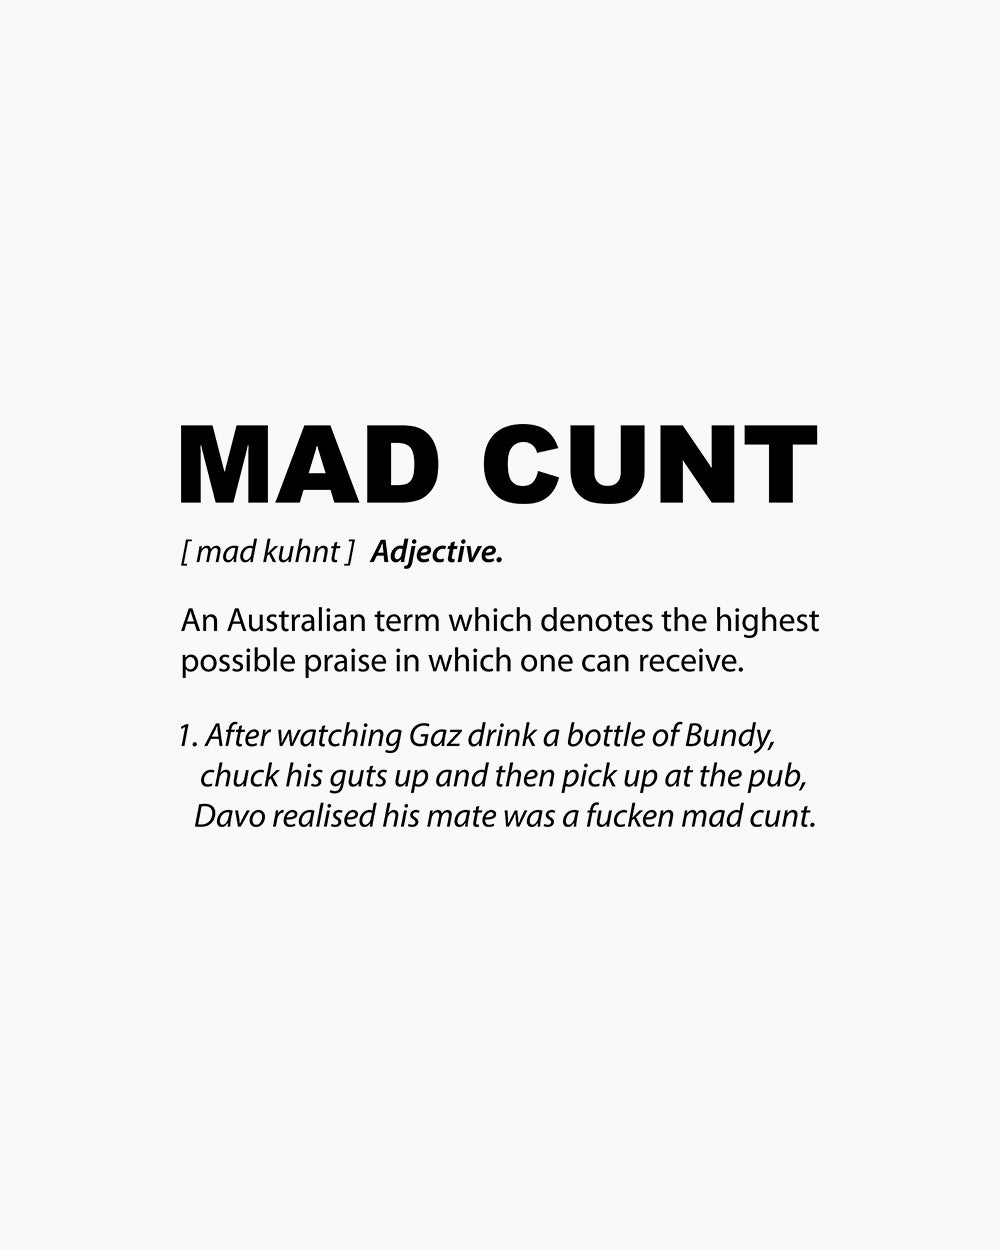 Mad Cunt Long Sleeve Australia Online #colour_white